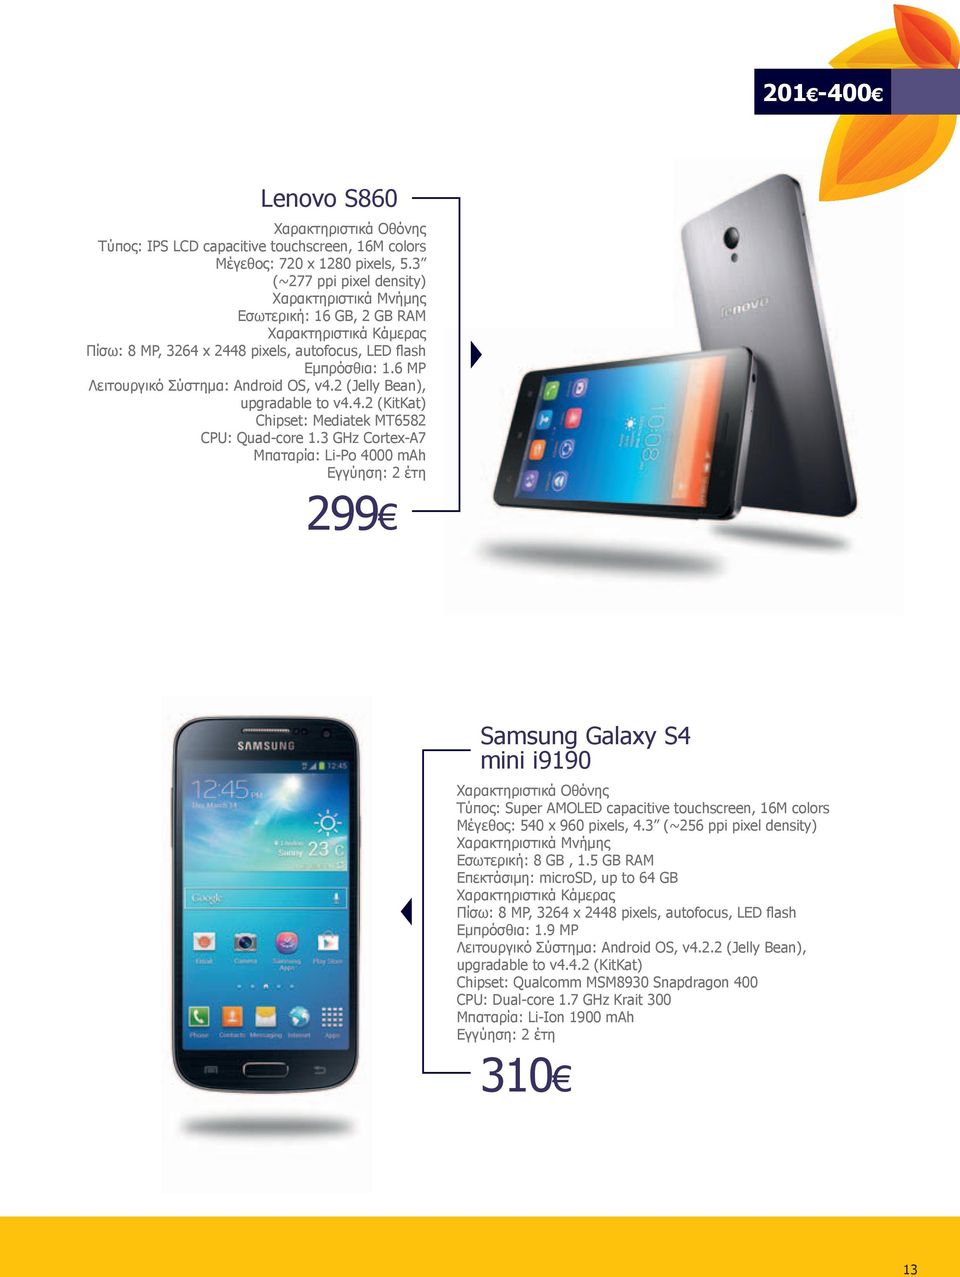 3 GHz Cortex-A7 Μπαταρία: Li-Po 4000 mah 299 Samsung Galaxy S4 mini i9190 Τύπος: Super AMOLED capacitive touchscreen, 16M colors Μέγεθος: 540 x 960 pixels, 4.